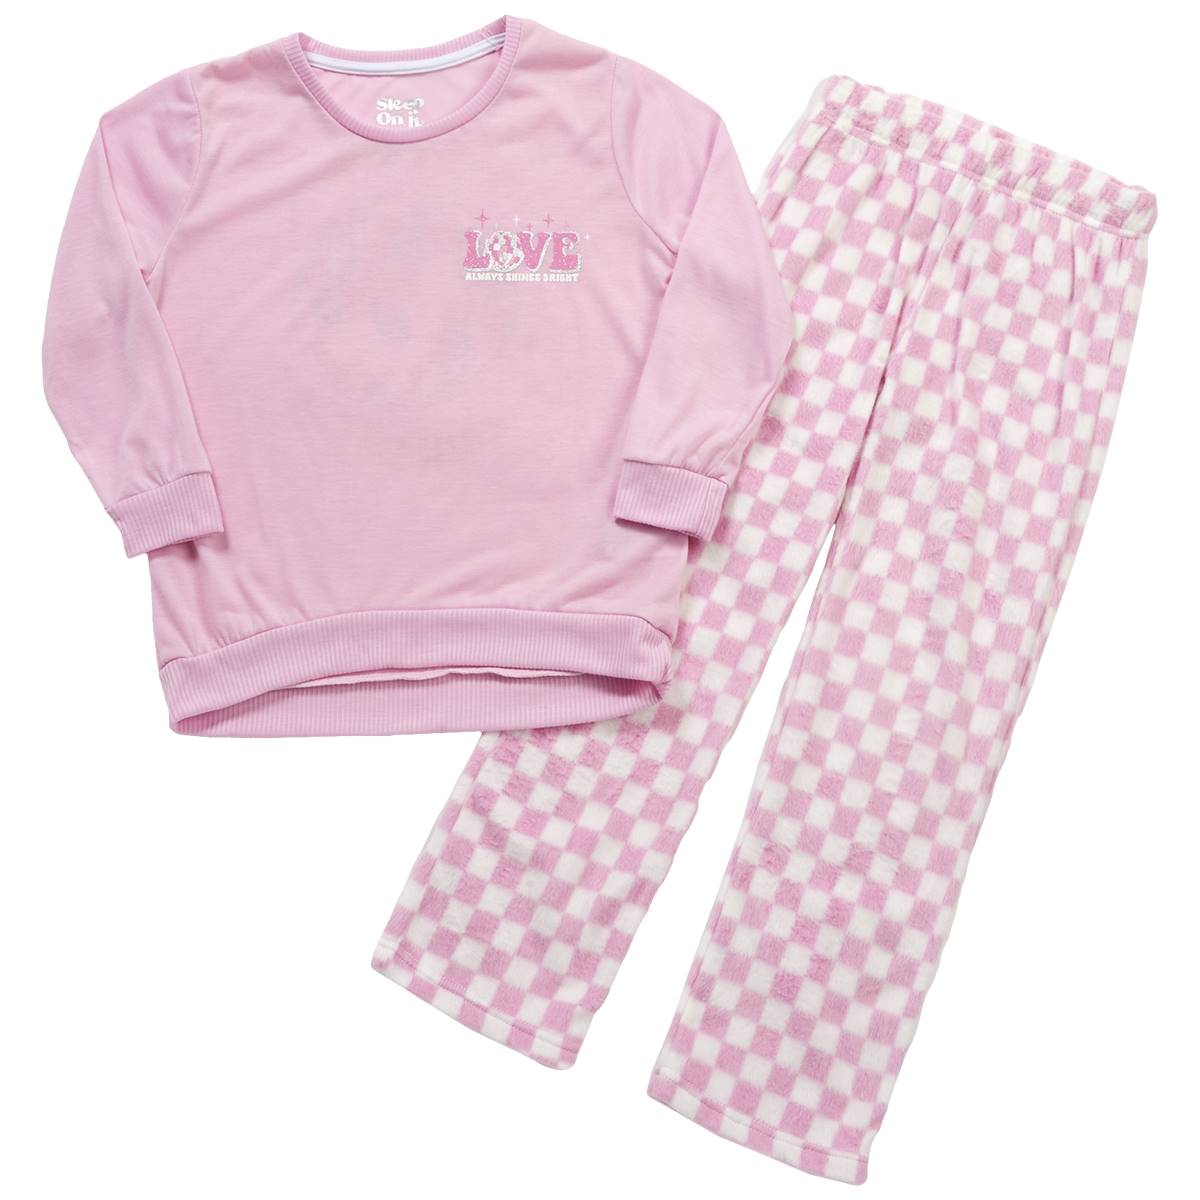 Girls (7-16) Sleep On It Love Top & Minky Checker Pajamas - Pink